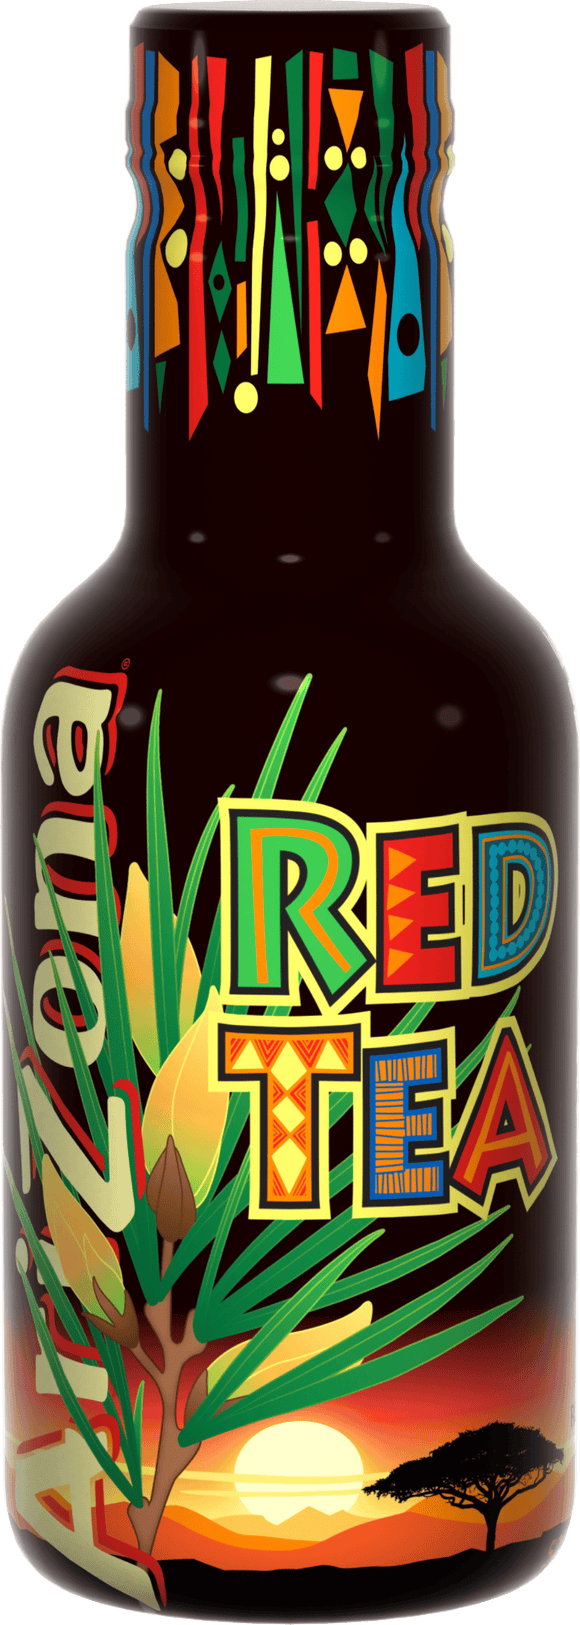 Arizona Red Tea Rooibos 6 x 500ml